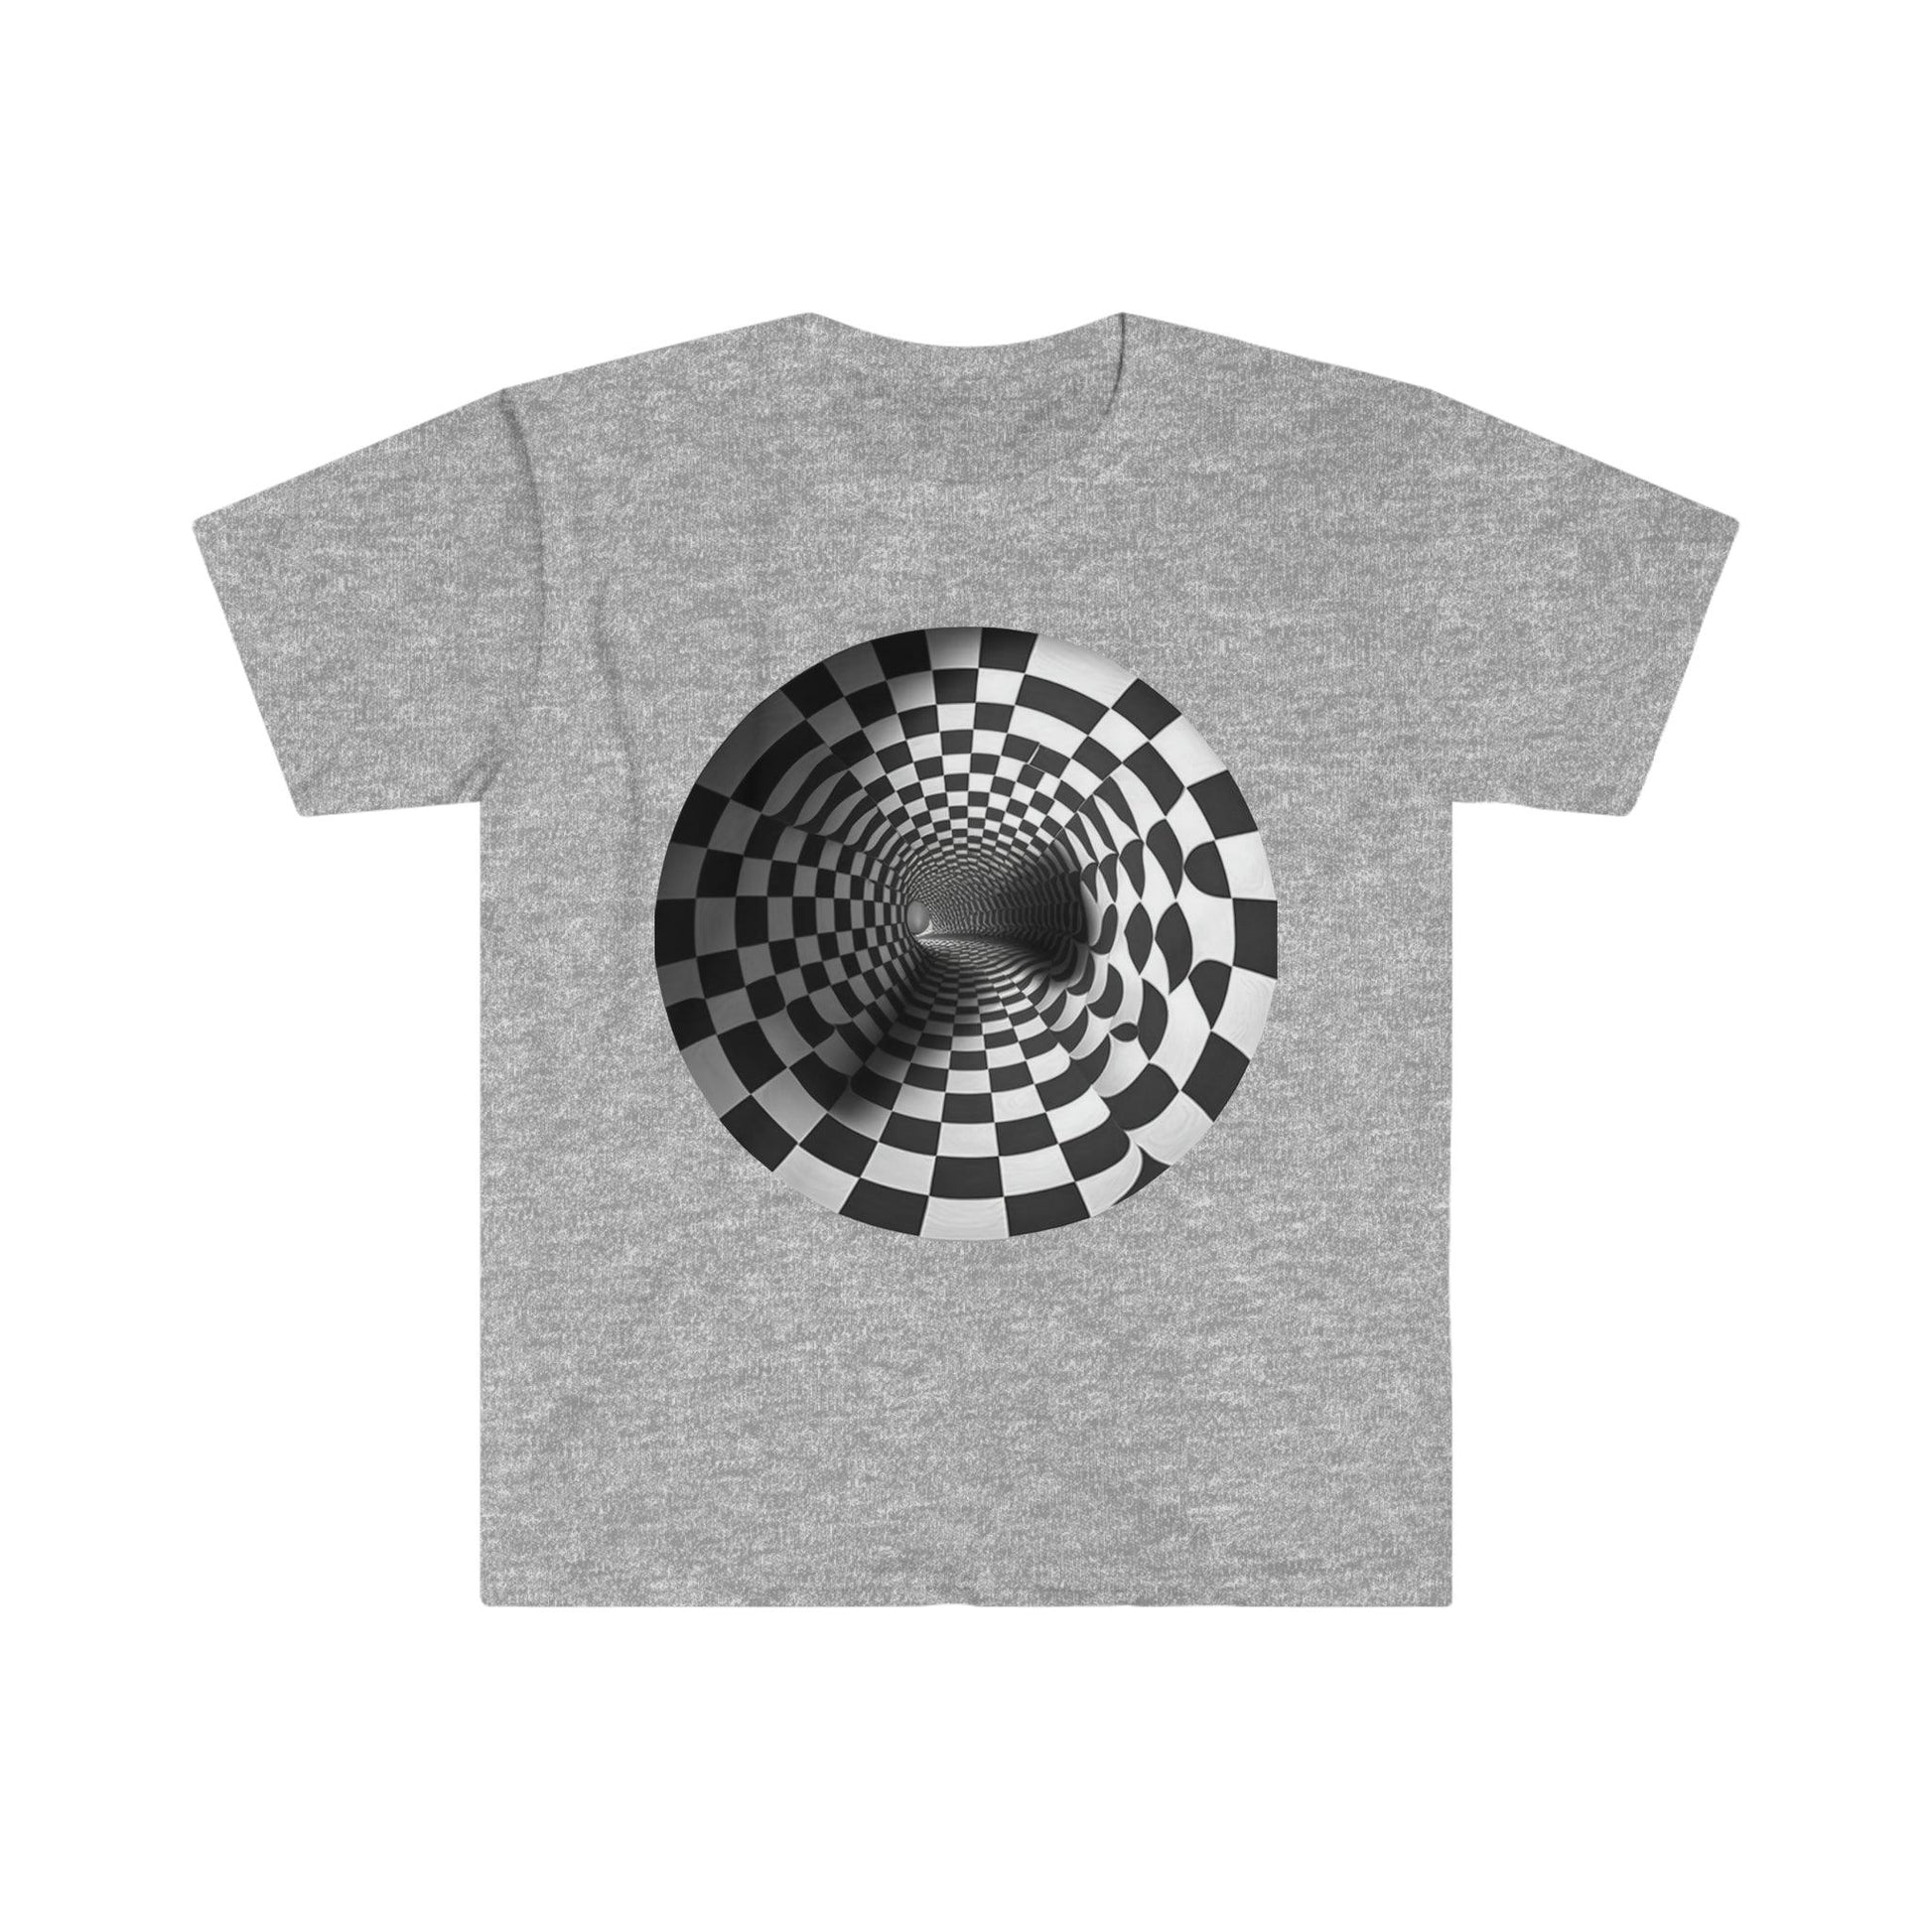 Mesmerizing Illusion: Psychedelic Tunnel Unisex Soft Style Digital AI Art T-Shirt for Festival and Street Wear - Alchemystics.org